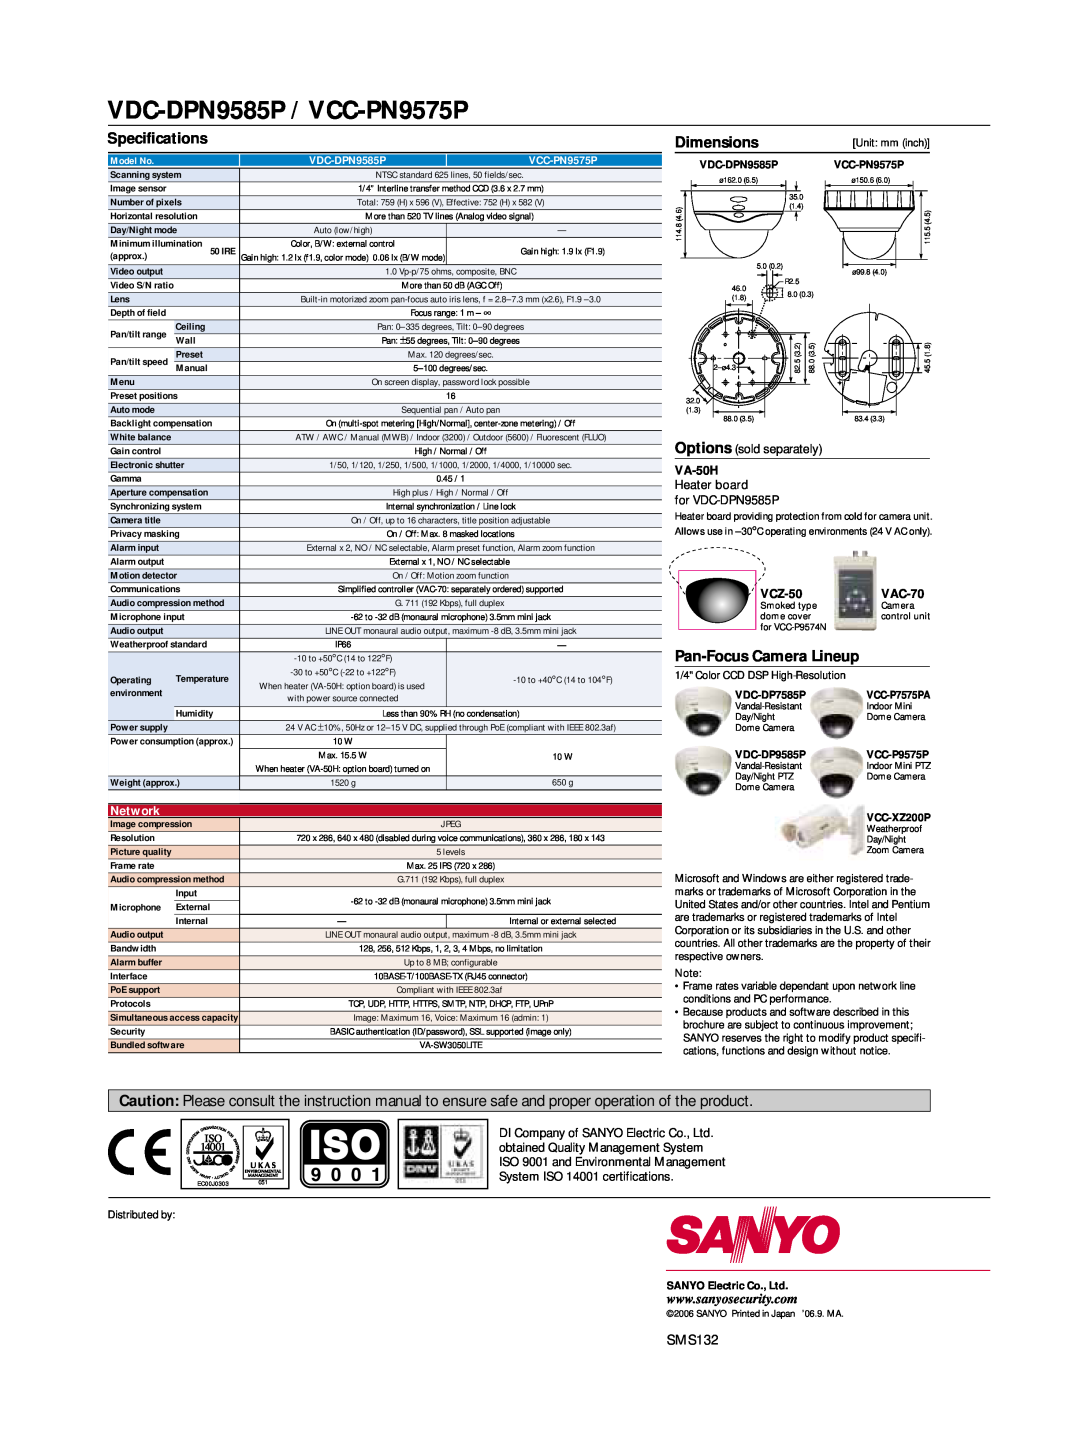 Sanyo VDC-DPN9585P / VCC-PN9575P, Specifications, Dimensions, Pan-Focus Camera Lineup, Network, VA-50H, VCZ-50, VAC-70 